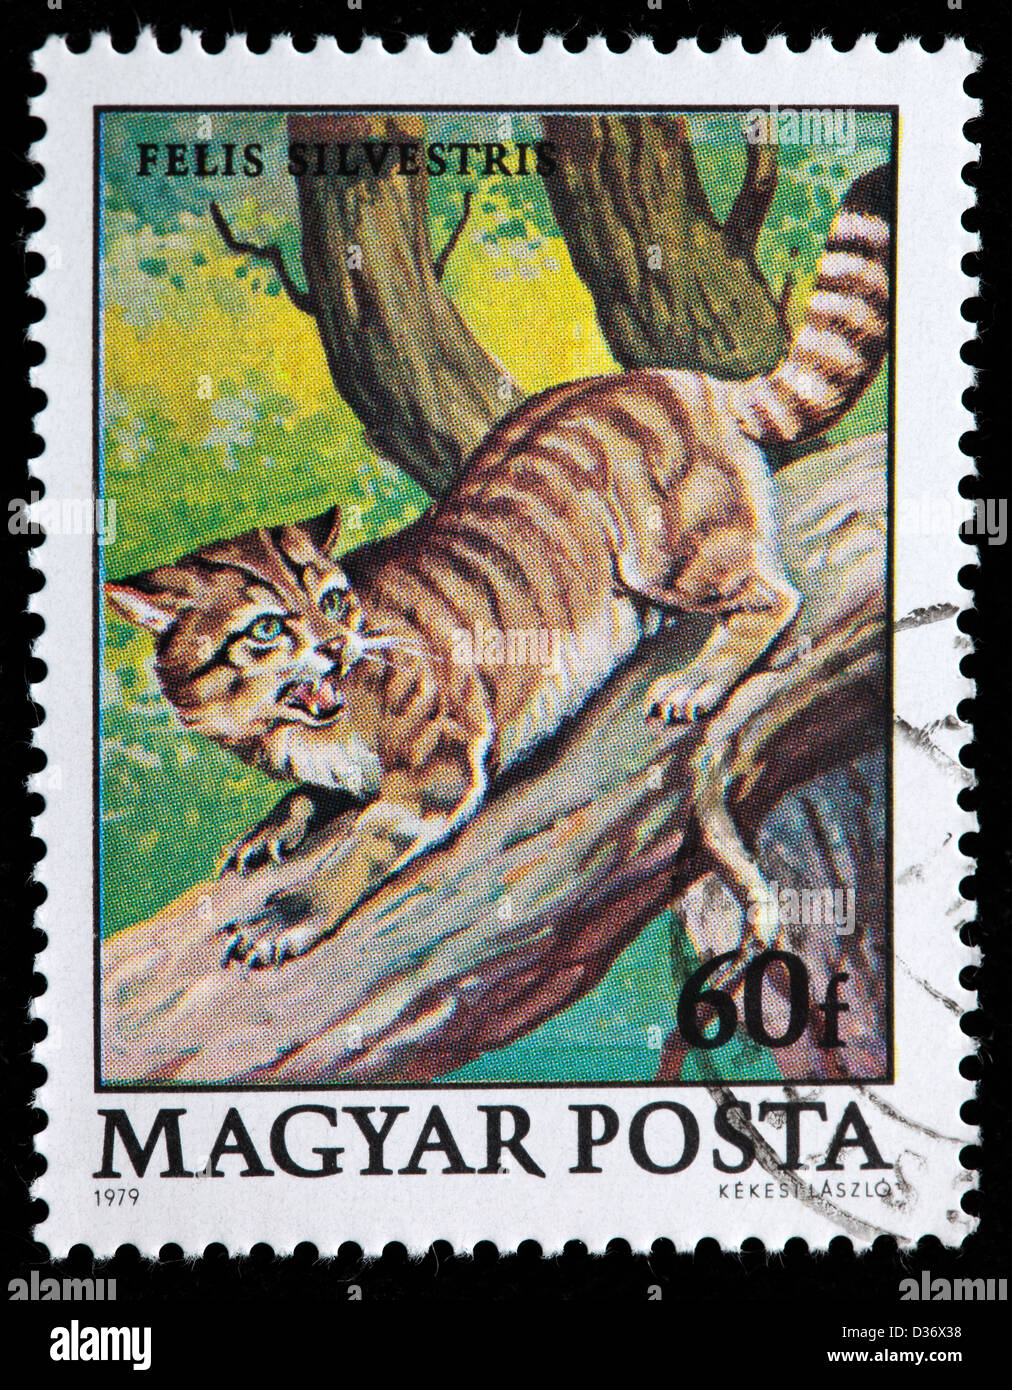 Wildcat (Felis silvestris), postage stamp, Hungary, 1979 Stock Photo